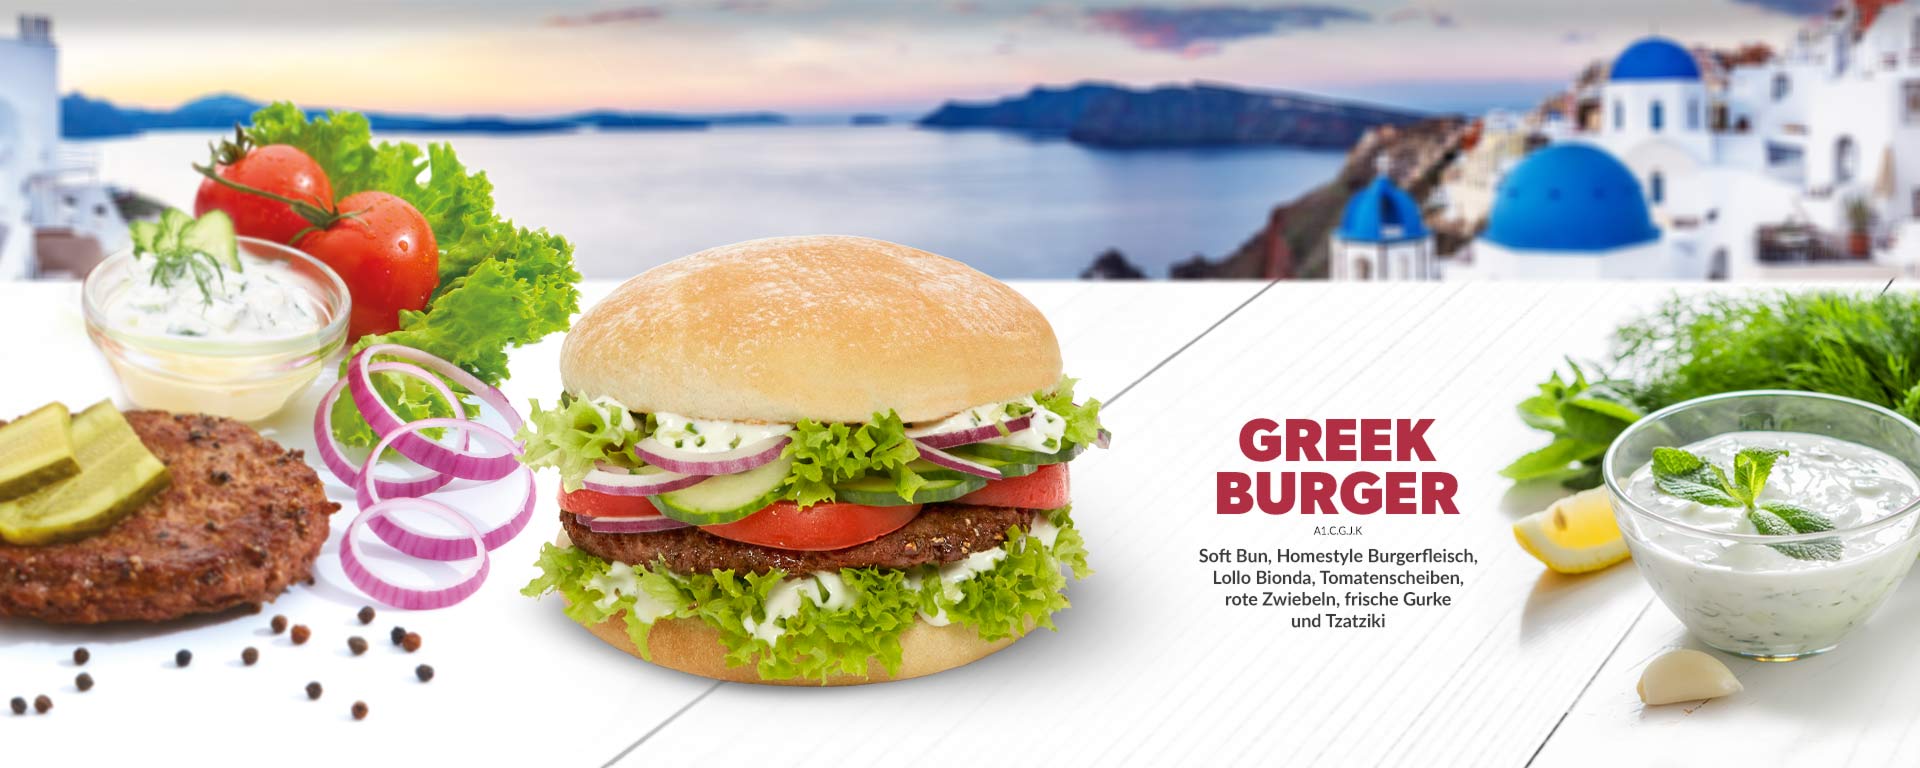 Greek Burger